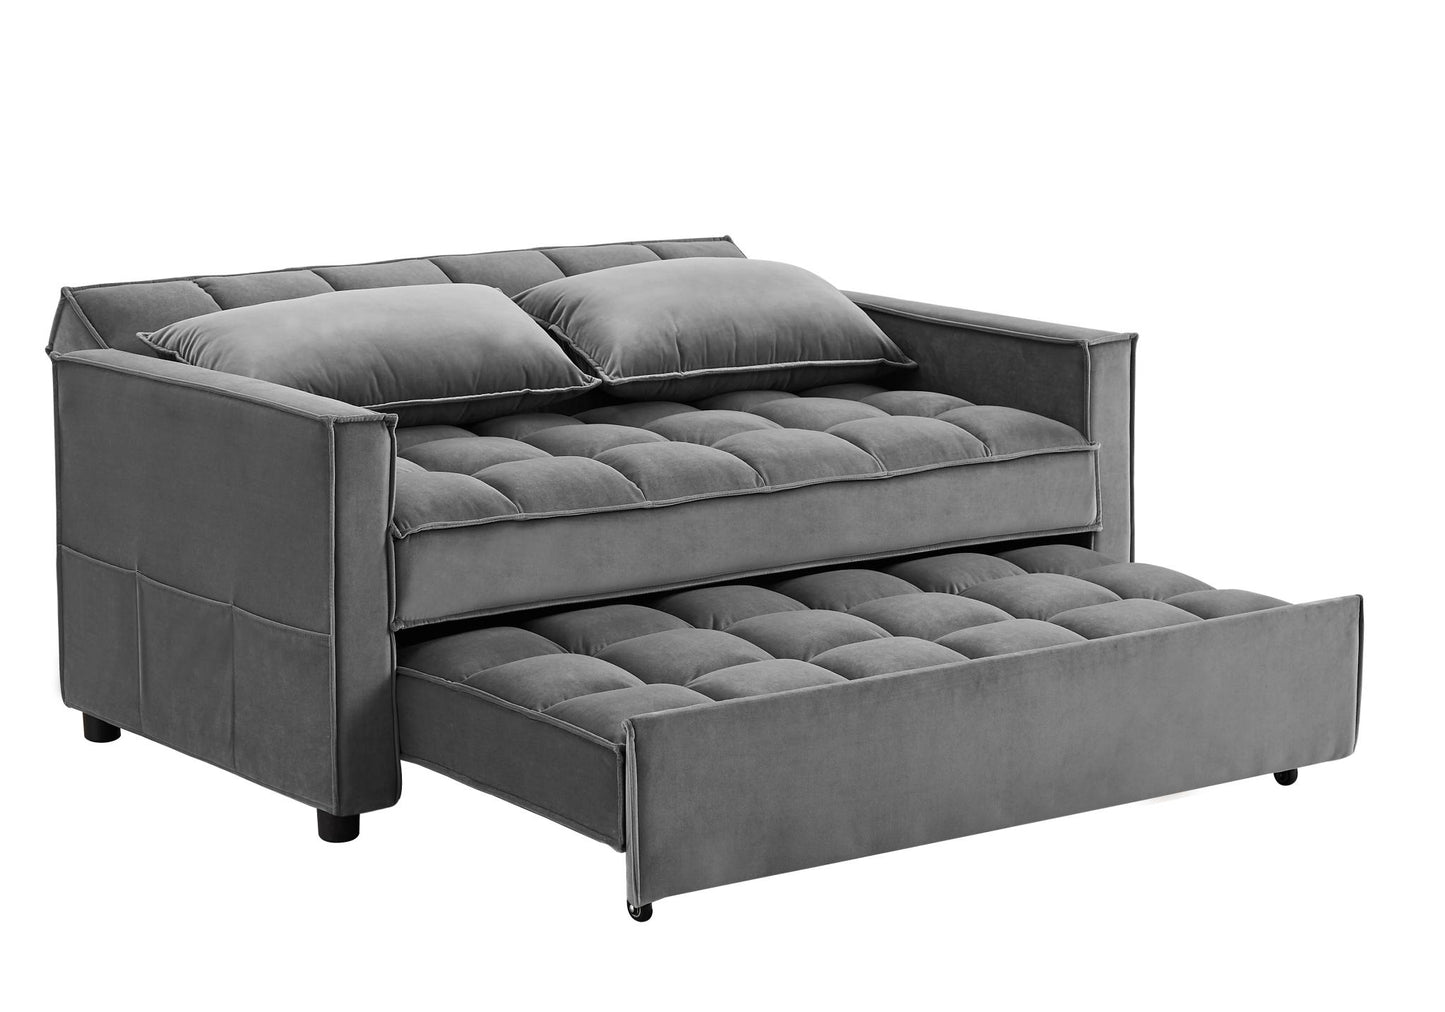 LAST™ Ash Grey Sofa Bed